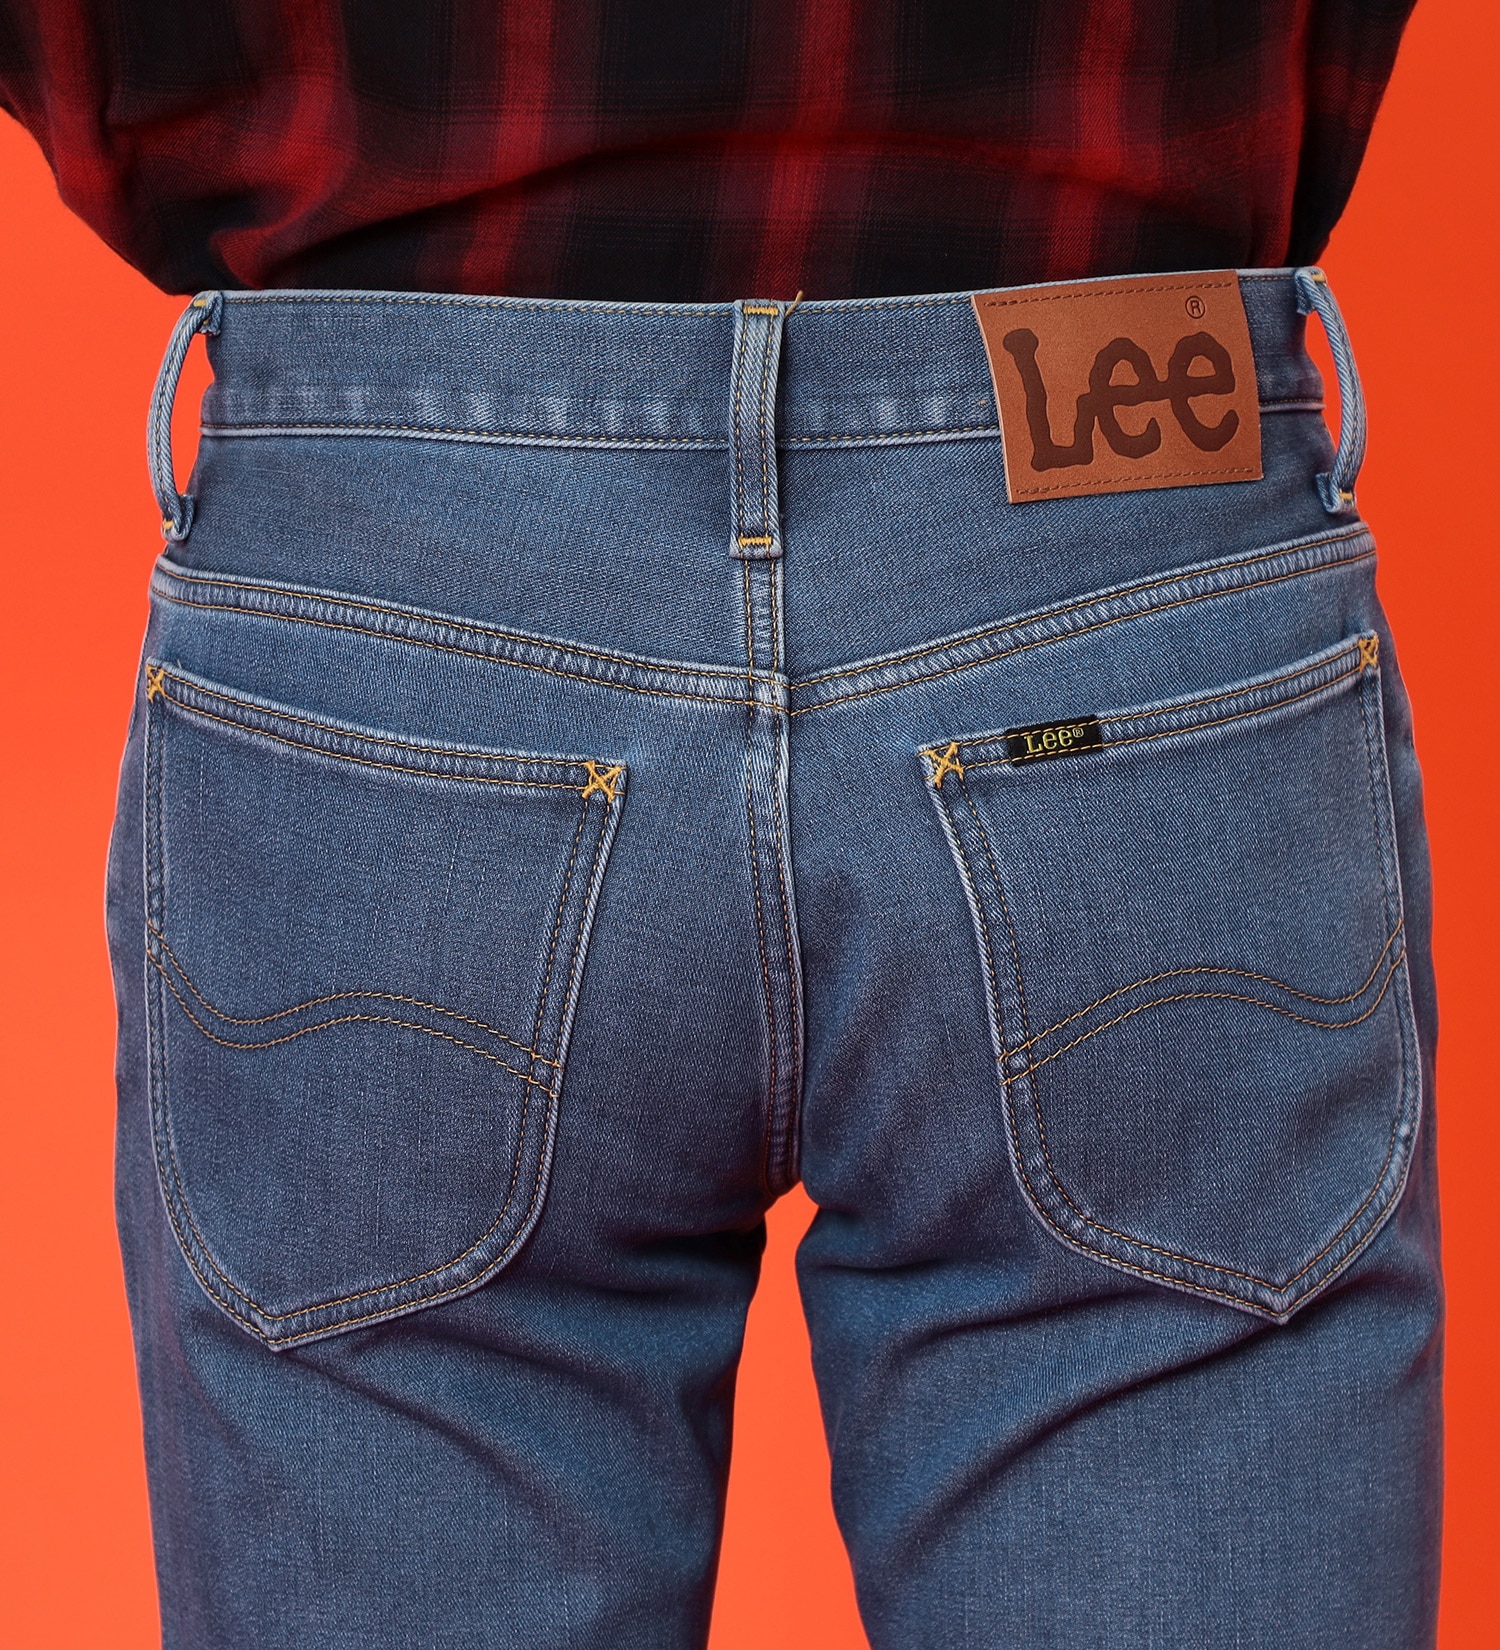 Lee(リー)の【先行SALE】【3,000円OFF】【裏起毛】2層構造で暖かいAMERICAN STANDARD 102 ブーツカット【暖】|パンツ/デニムパンツ/メンズ|中色ブルー